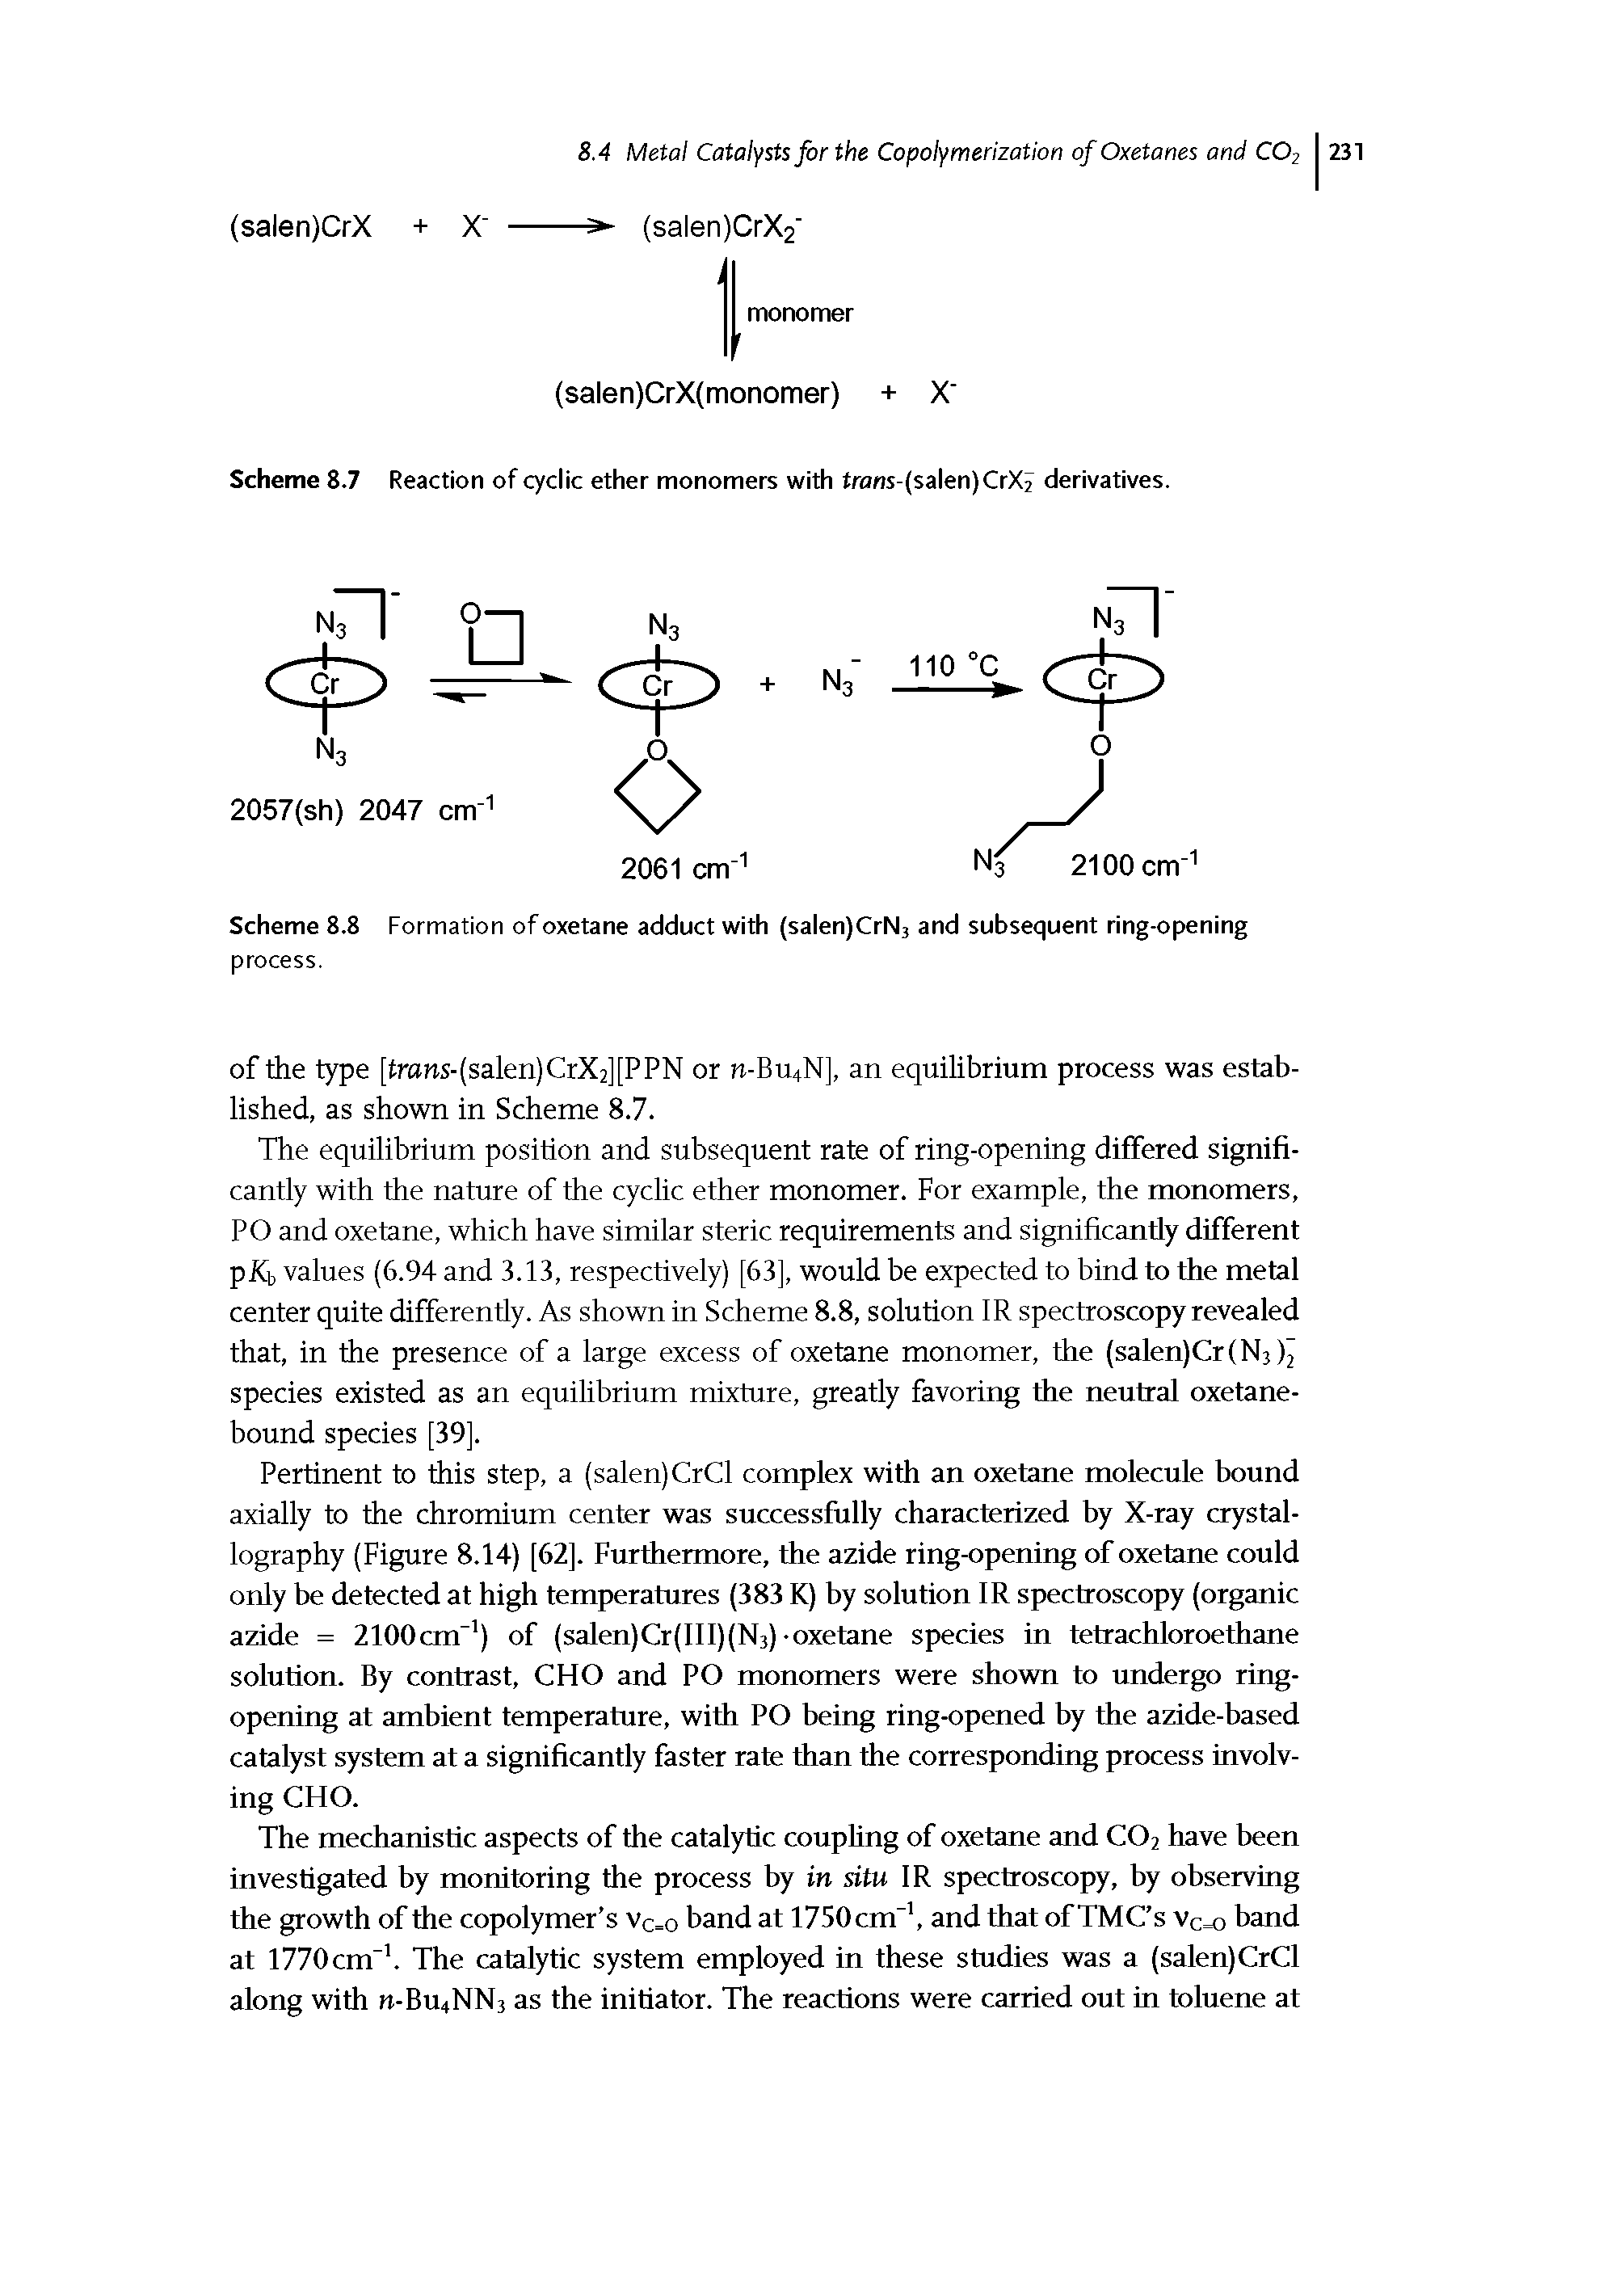 Scheme 8.7 Reaction of cyclic ether monomers with trans-(salen)CrXj derivatives.